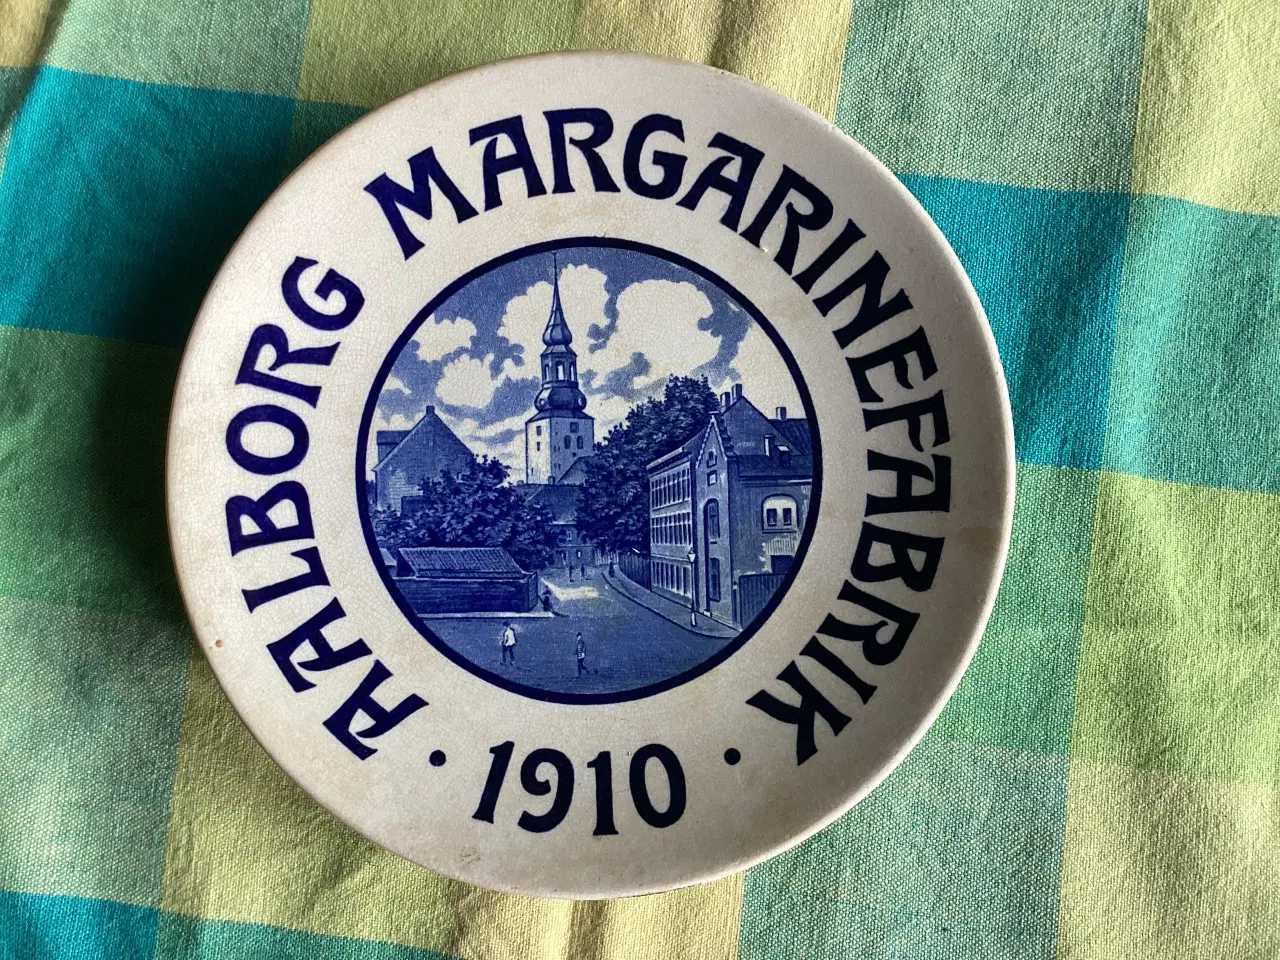 Billede 1 - Aalborg margarinefabrik 1910